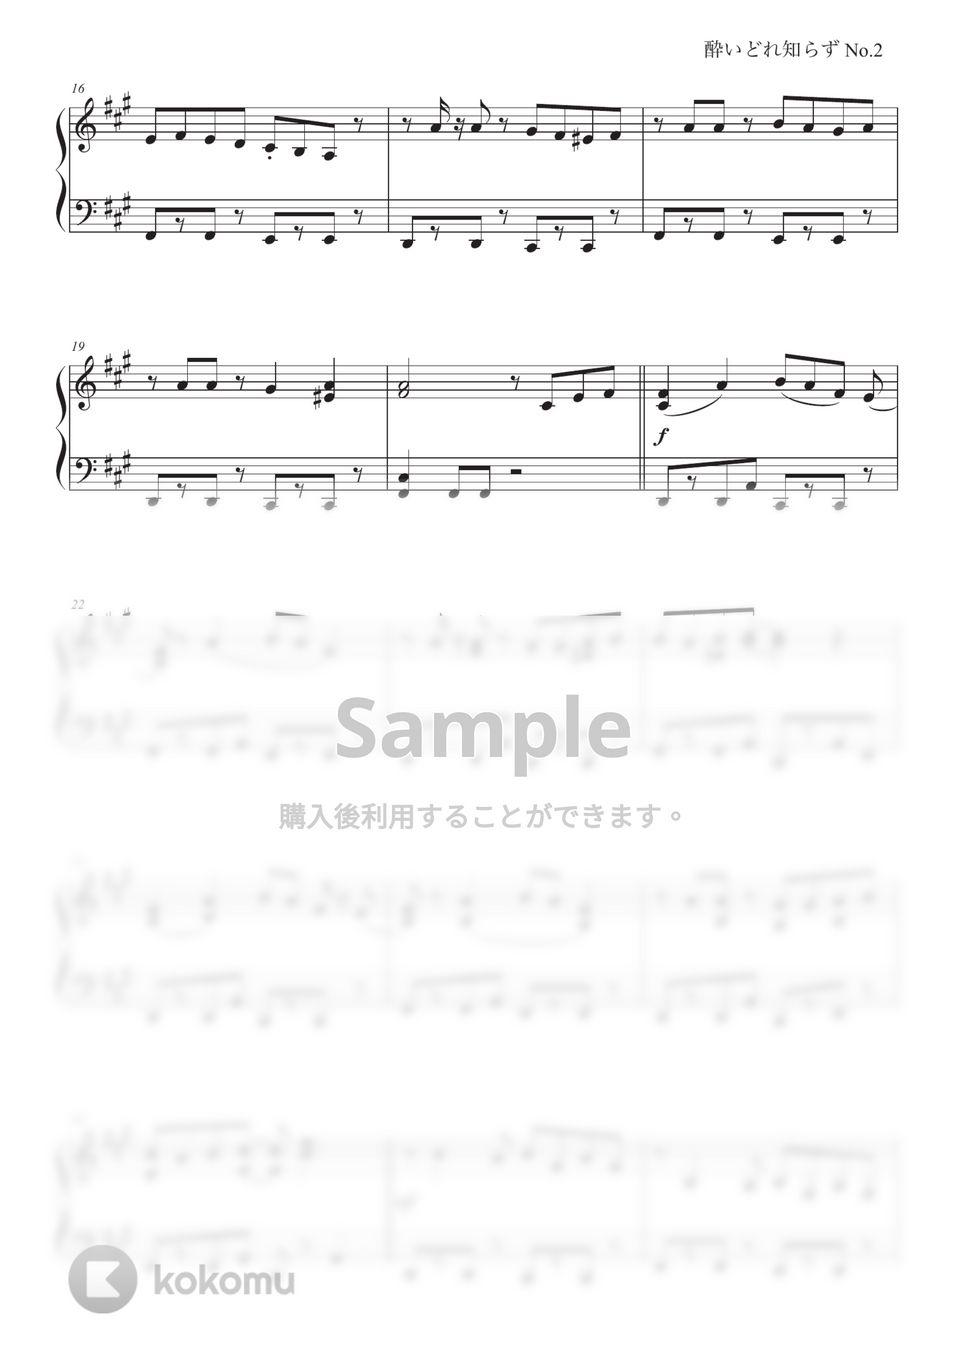 Kanaria - 酔いどれ知らず (Short ver.) by 入江しほり